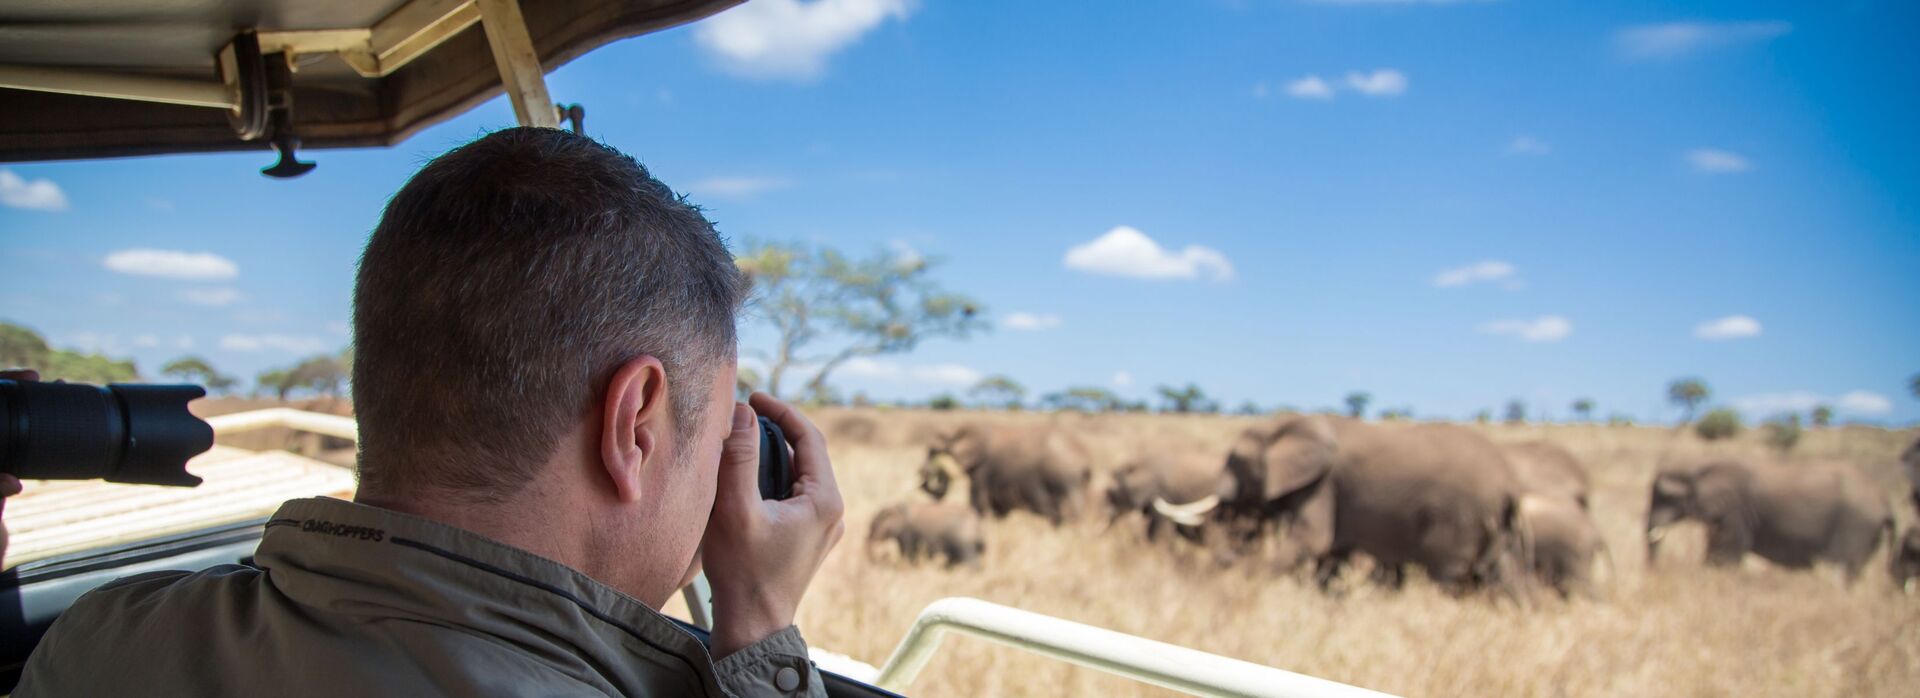 Man on Safari in Kenya